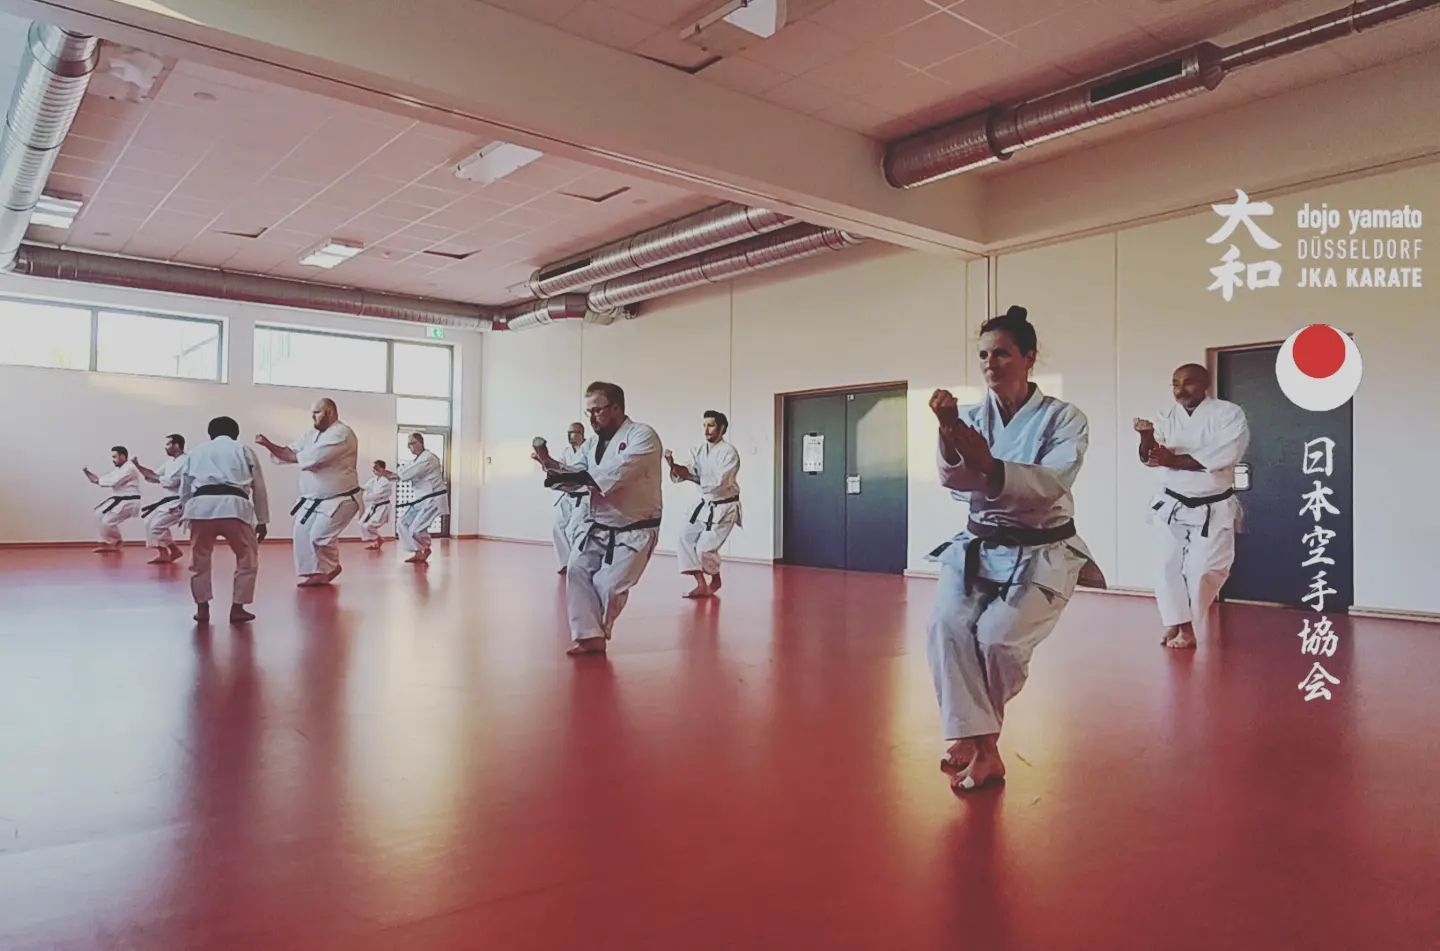 Training im Dojo Yamato Düsseldorf e.V.🥋
Trainer Keigo Shimizu 🇯🇵
.
.
.
.
.
.
.
#karate #training #fun #jka #djkb #kihon #kata #kumite #düsseldorf #duesseldorf #japan #sport #sportmotivation #shotokan #traditional #nrw #yamatoduesseldorf #fitness #fitnessmotivation #jkaKarate #jkakaratedo #neuss #ratingen #hilden #leverkusen #kaarst #selbstbstbewusstsein #selbstvertrauen